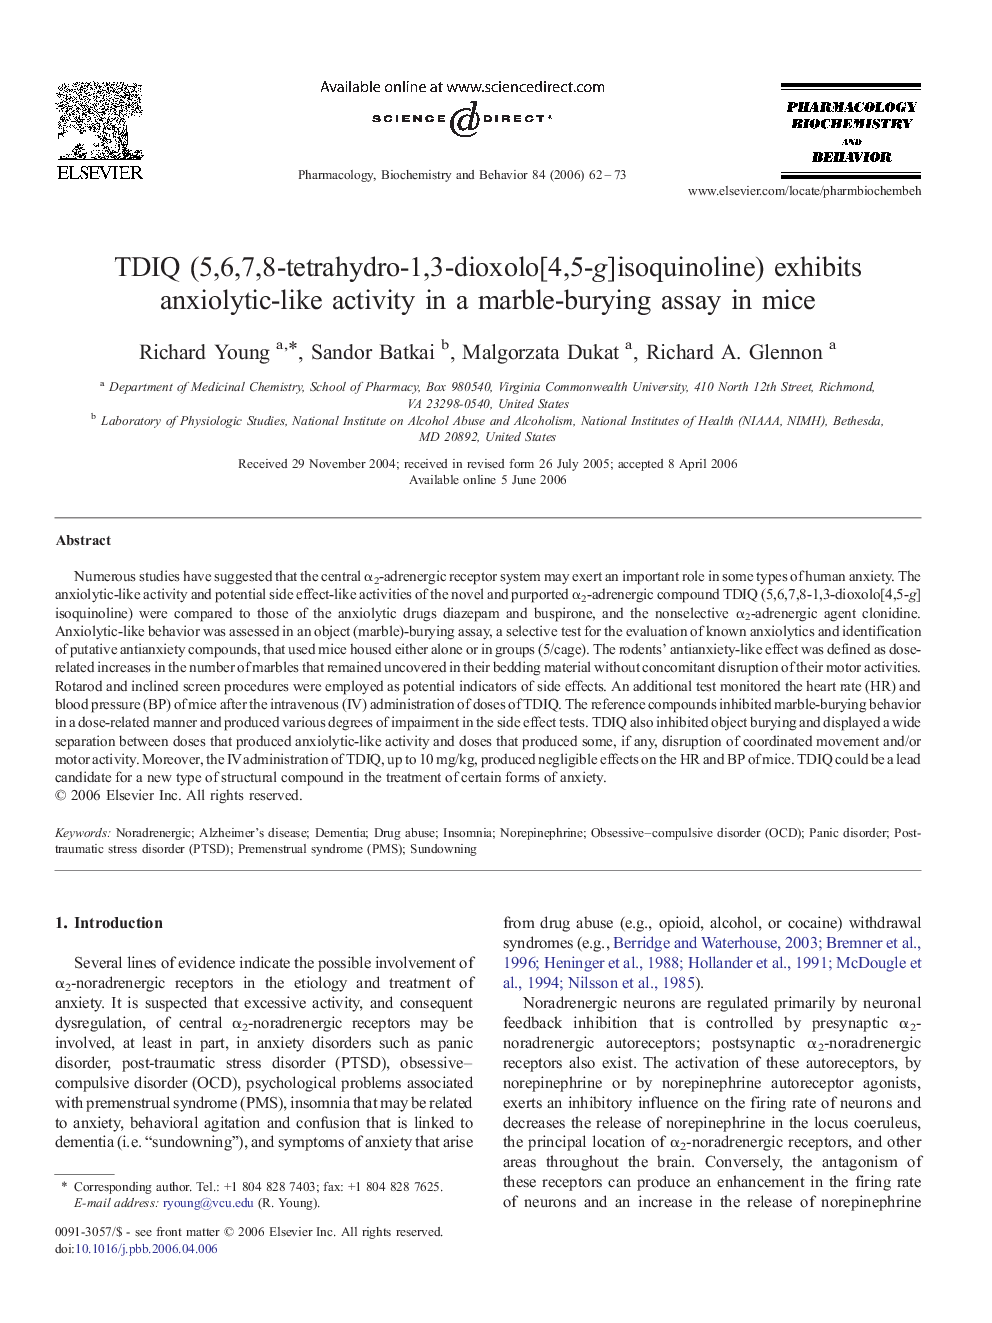 TDIQ (5,6,7,8-tetrahydro-1,3-dioxolo[4,5-g]isoquinoline) exhibits anxiolytic-like activity in a marble-burying assay in mice